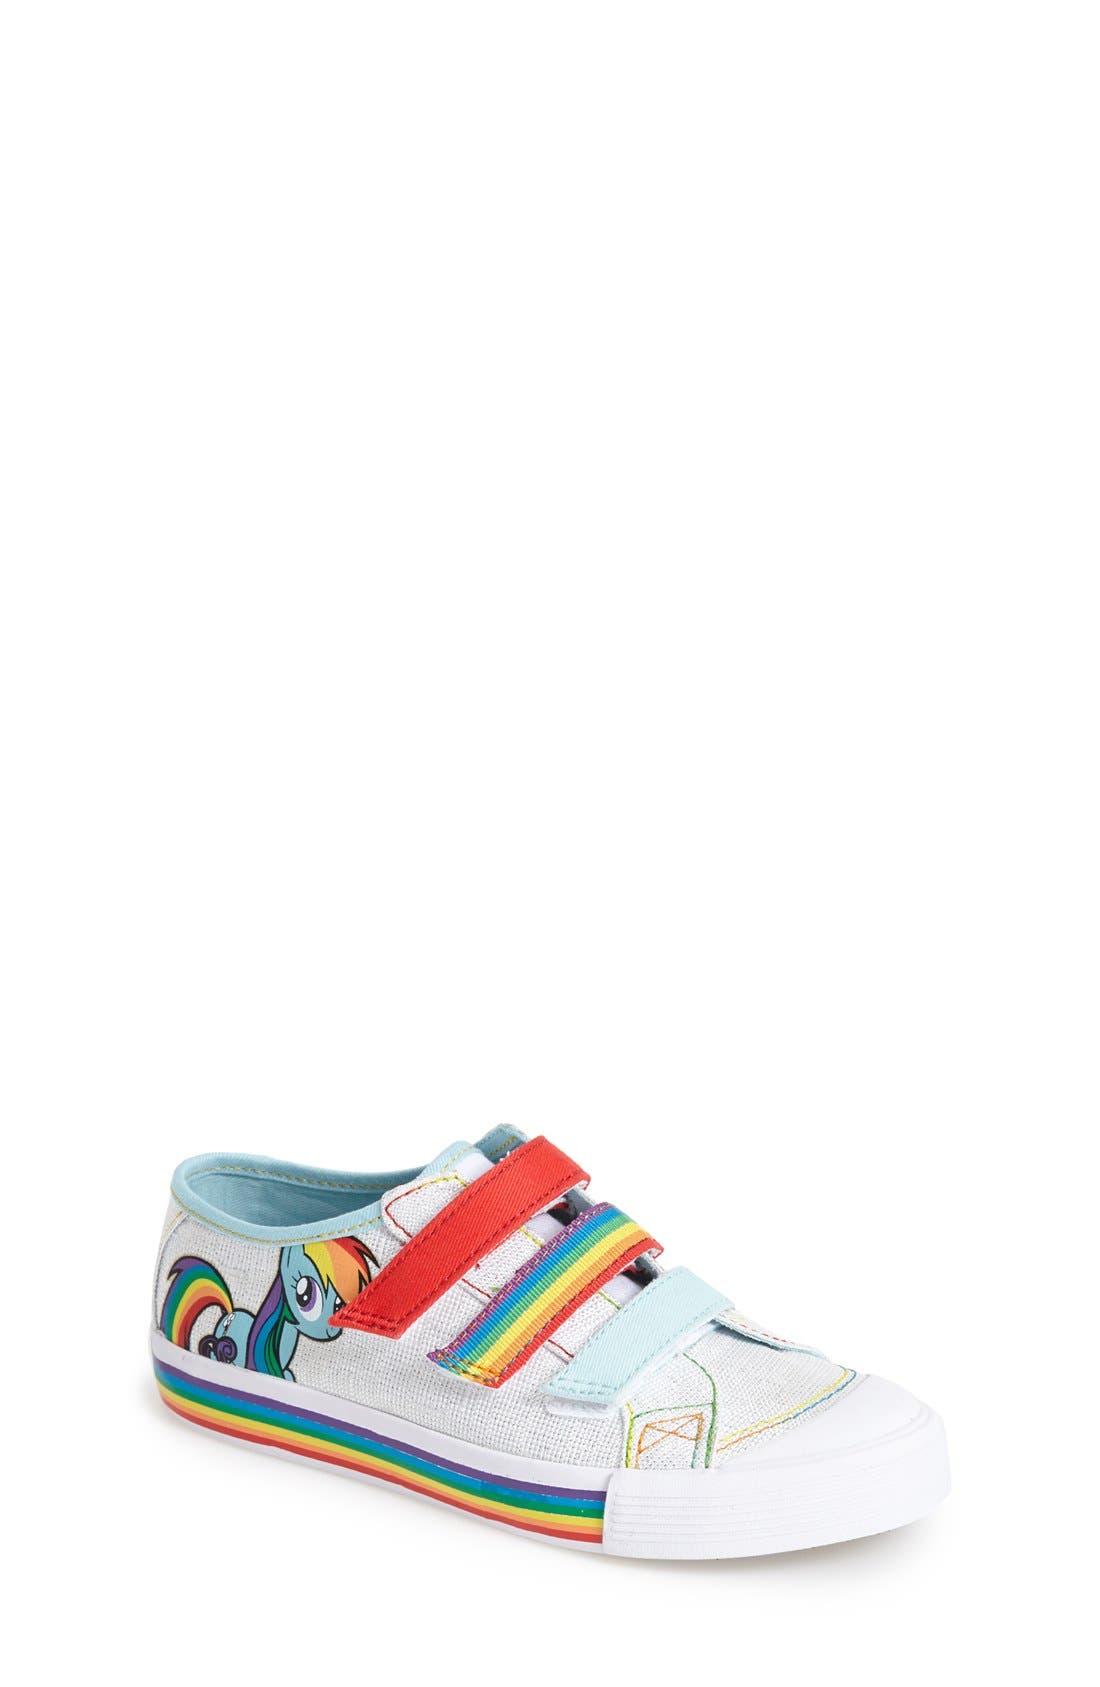 rainbow dash sneakers